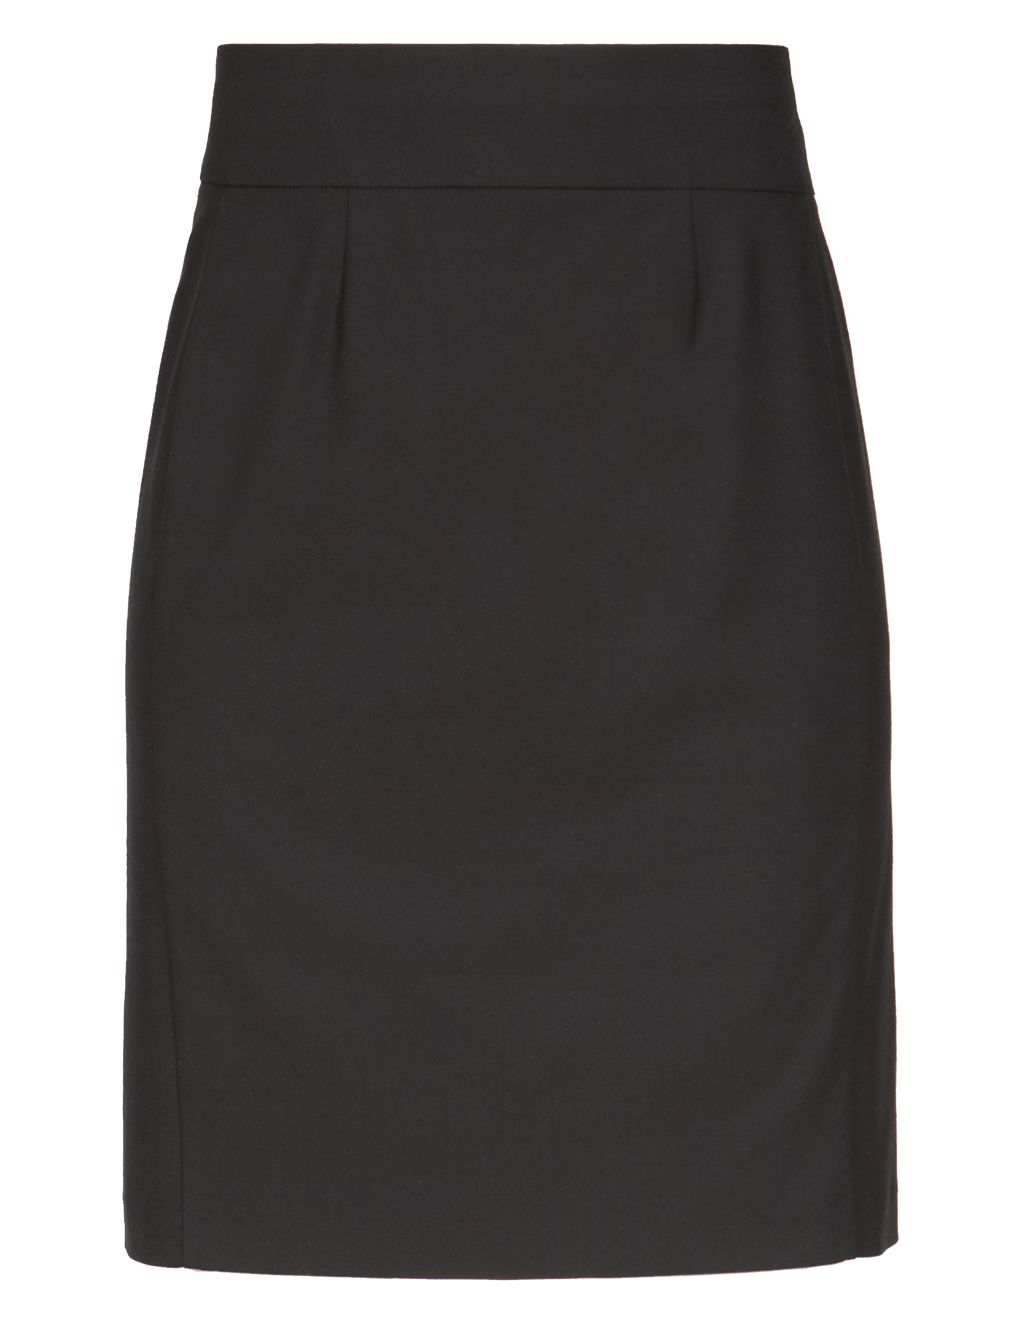 Senior Girls' Crease Resistant Pencil Skirt with Stormwear™ (Older Girls) 1 of 4